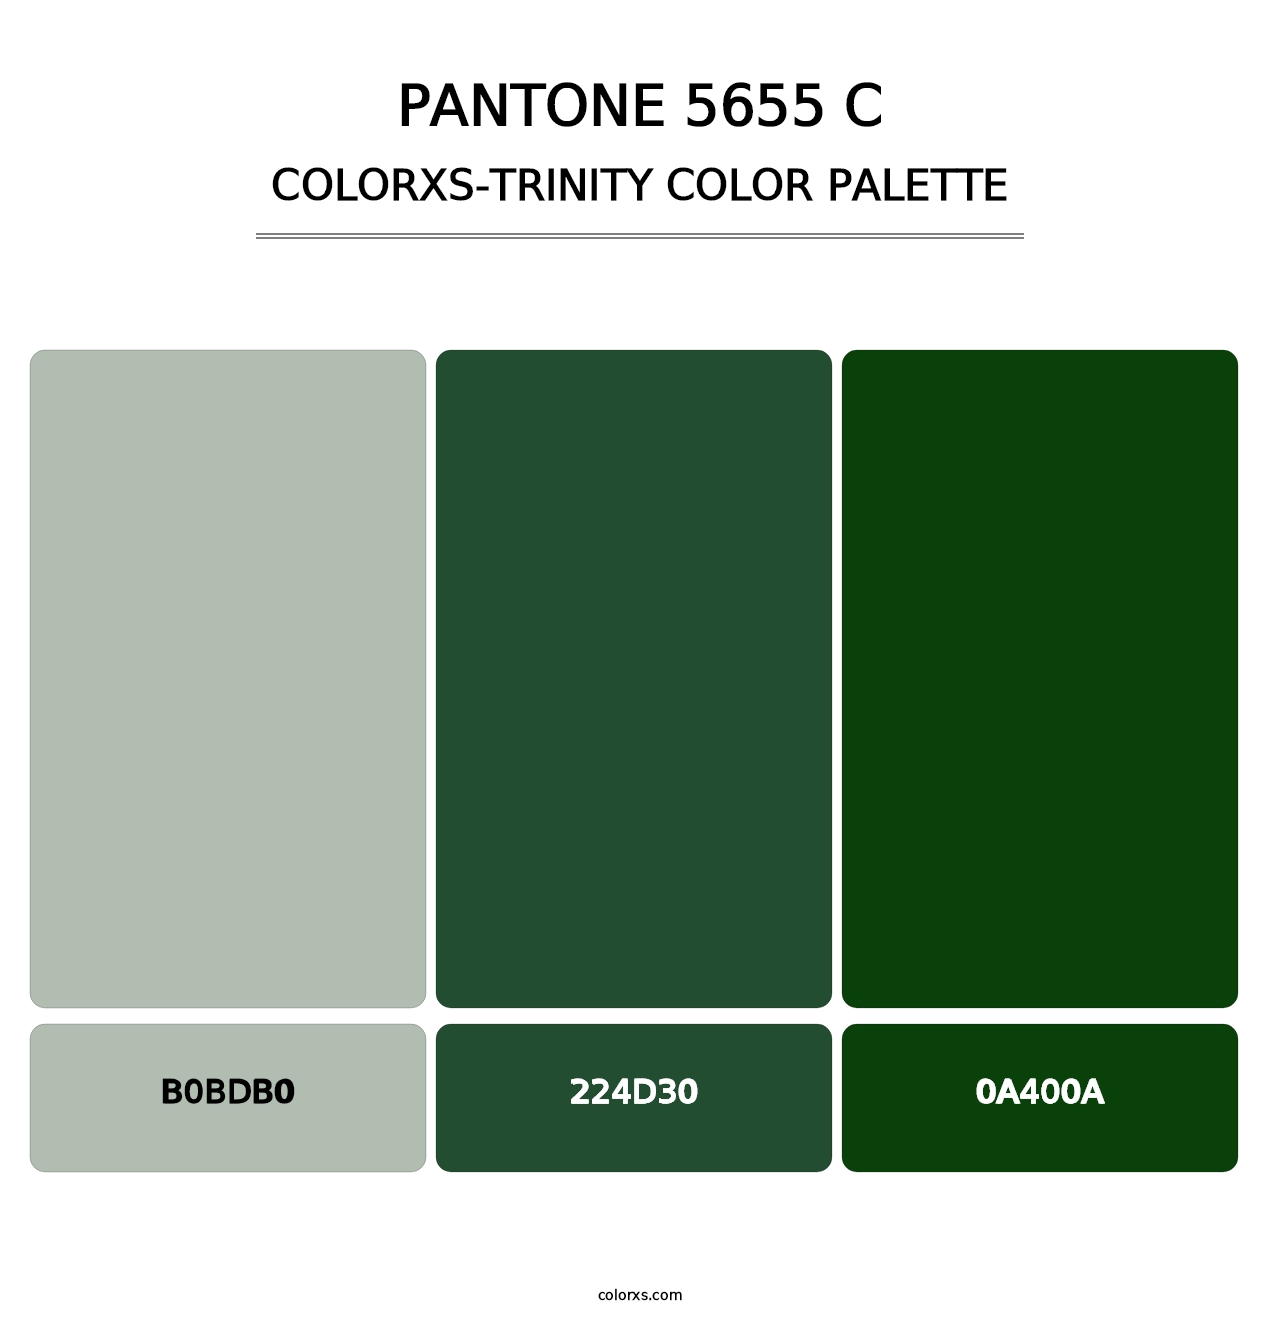 PANTONE 5655 C - Colorxs Trinity Palette